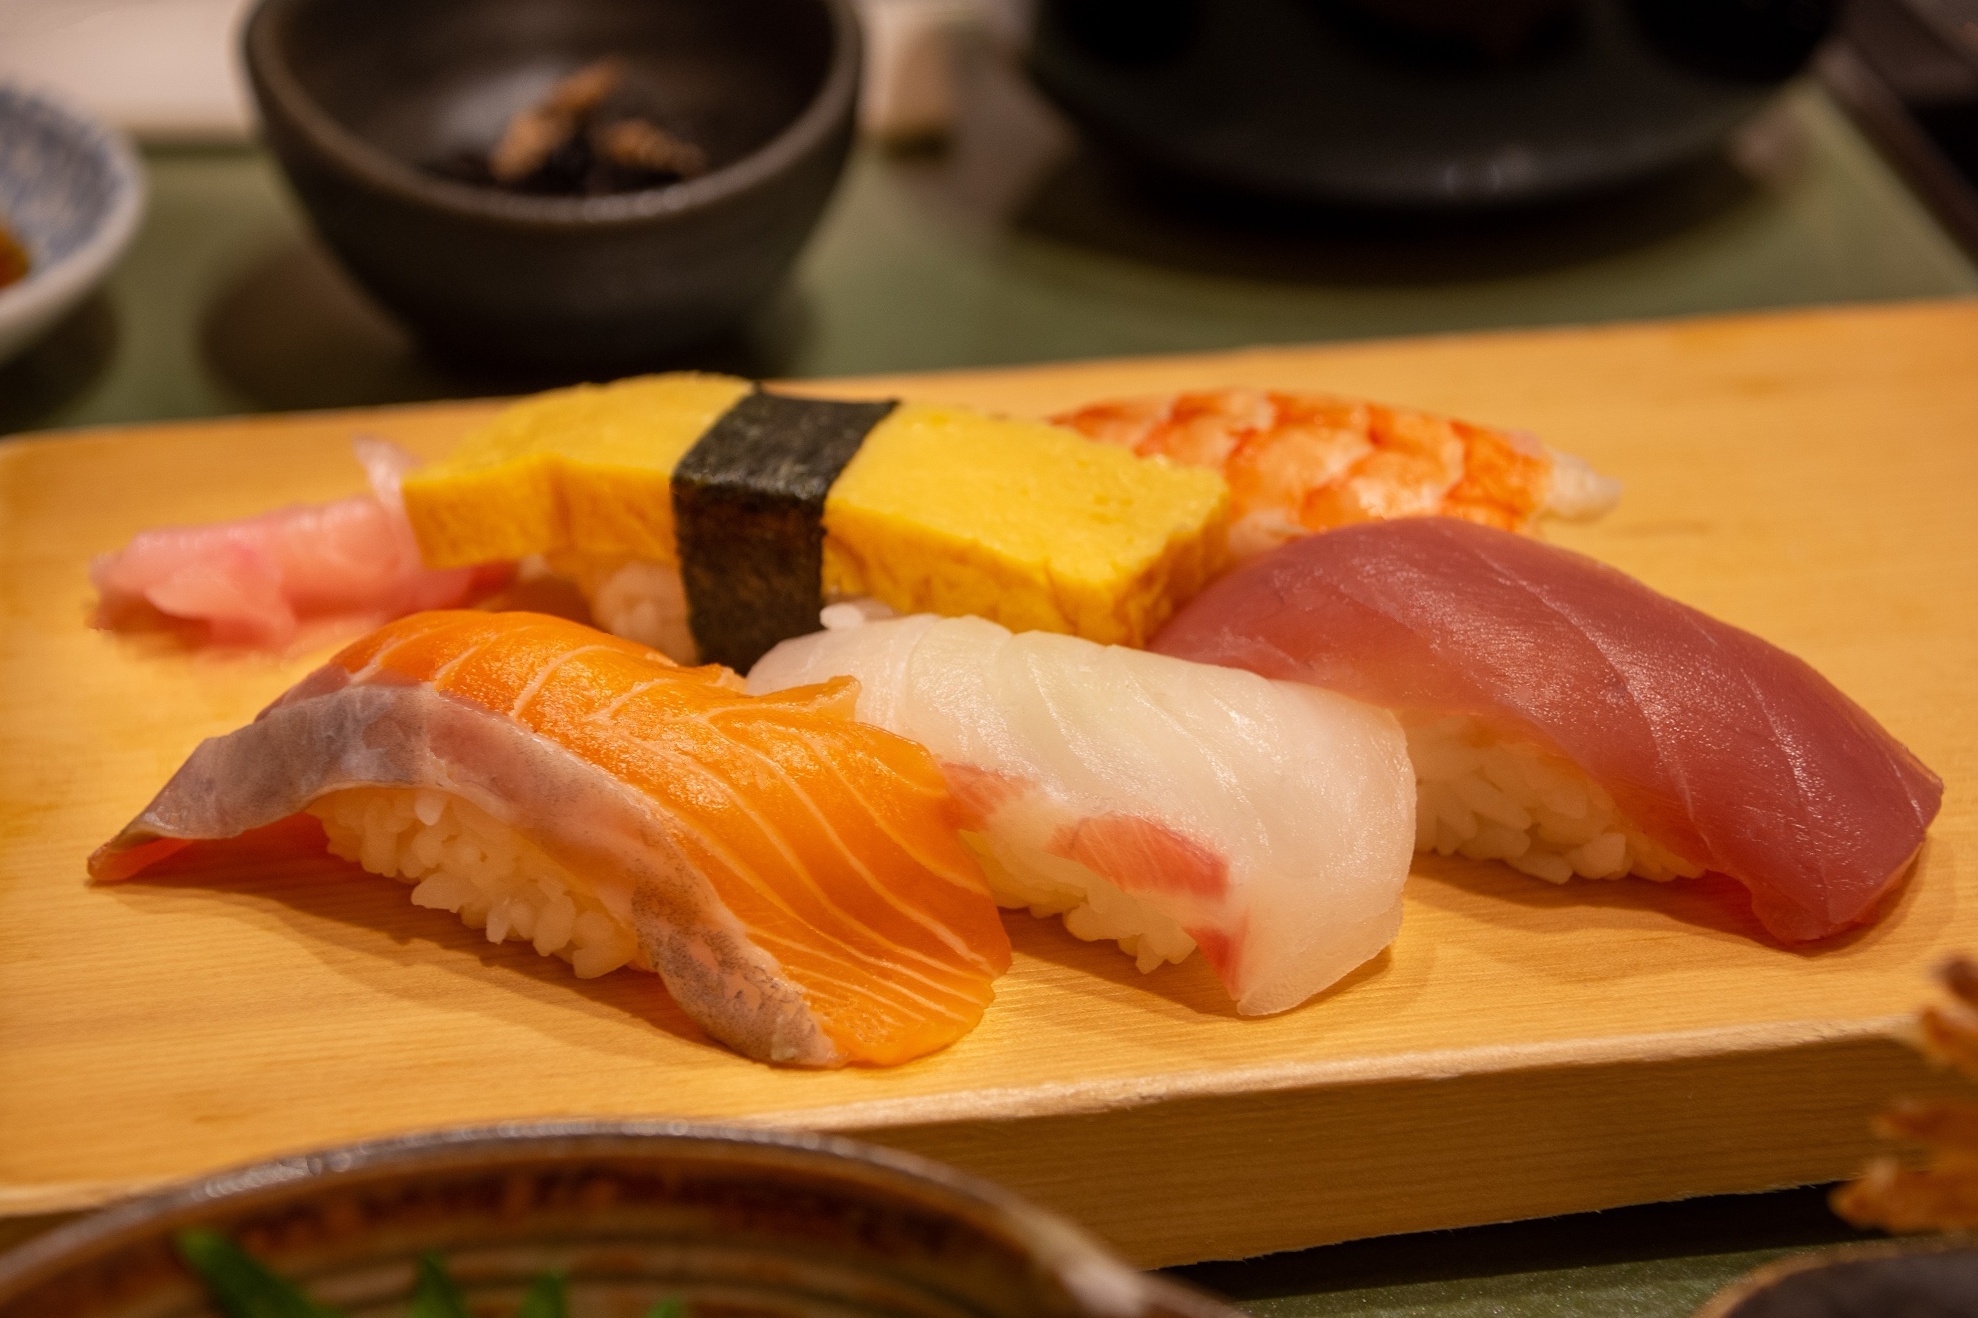 A fresh platter of sushi